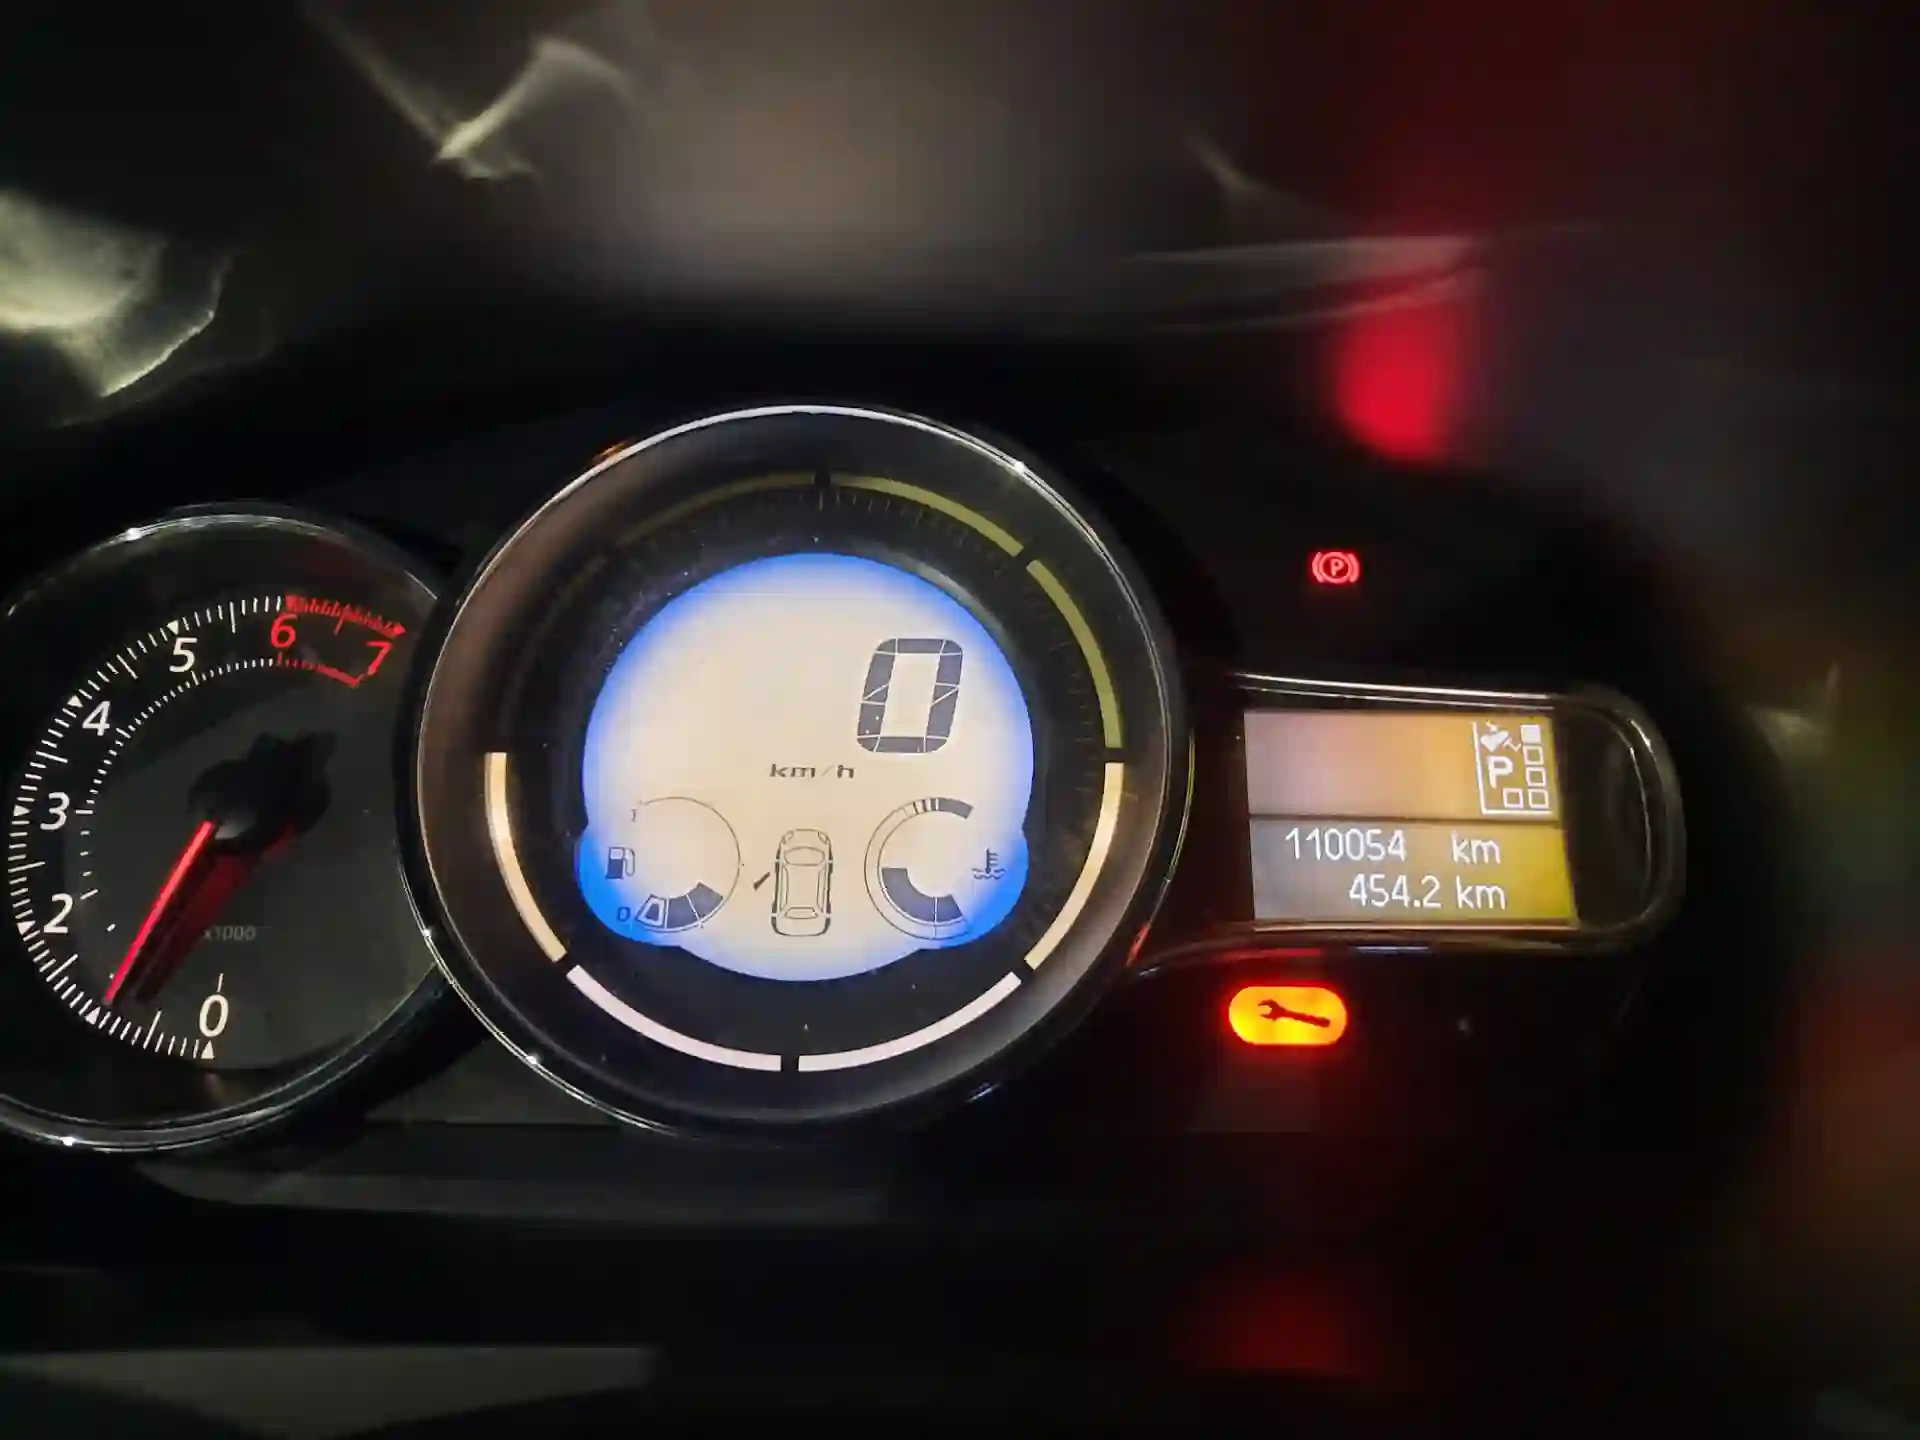 Renault Fluence, 2016, Automatic, 110054 KM,